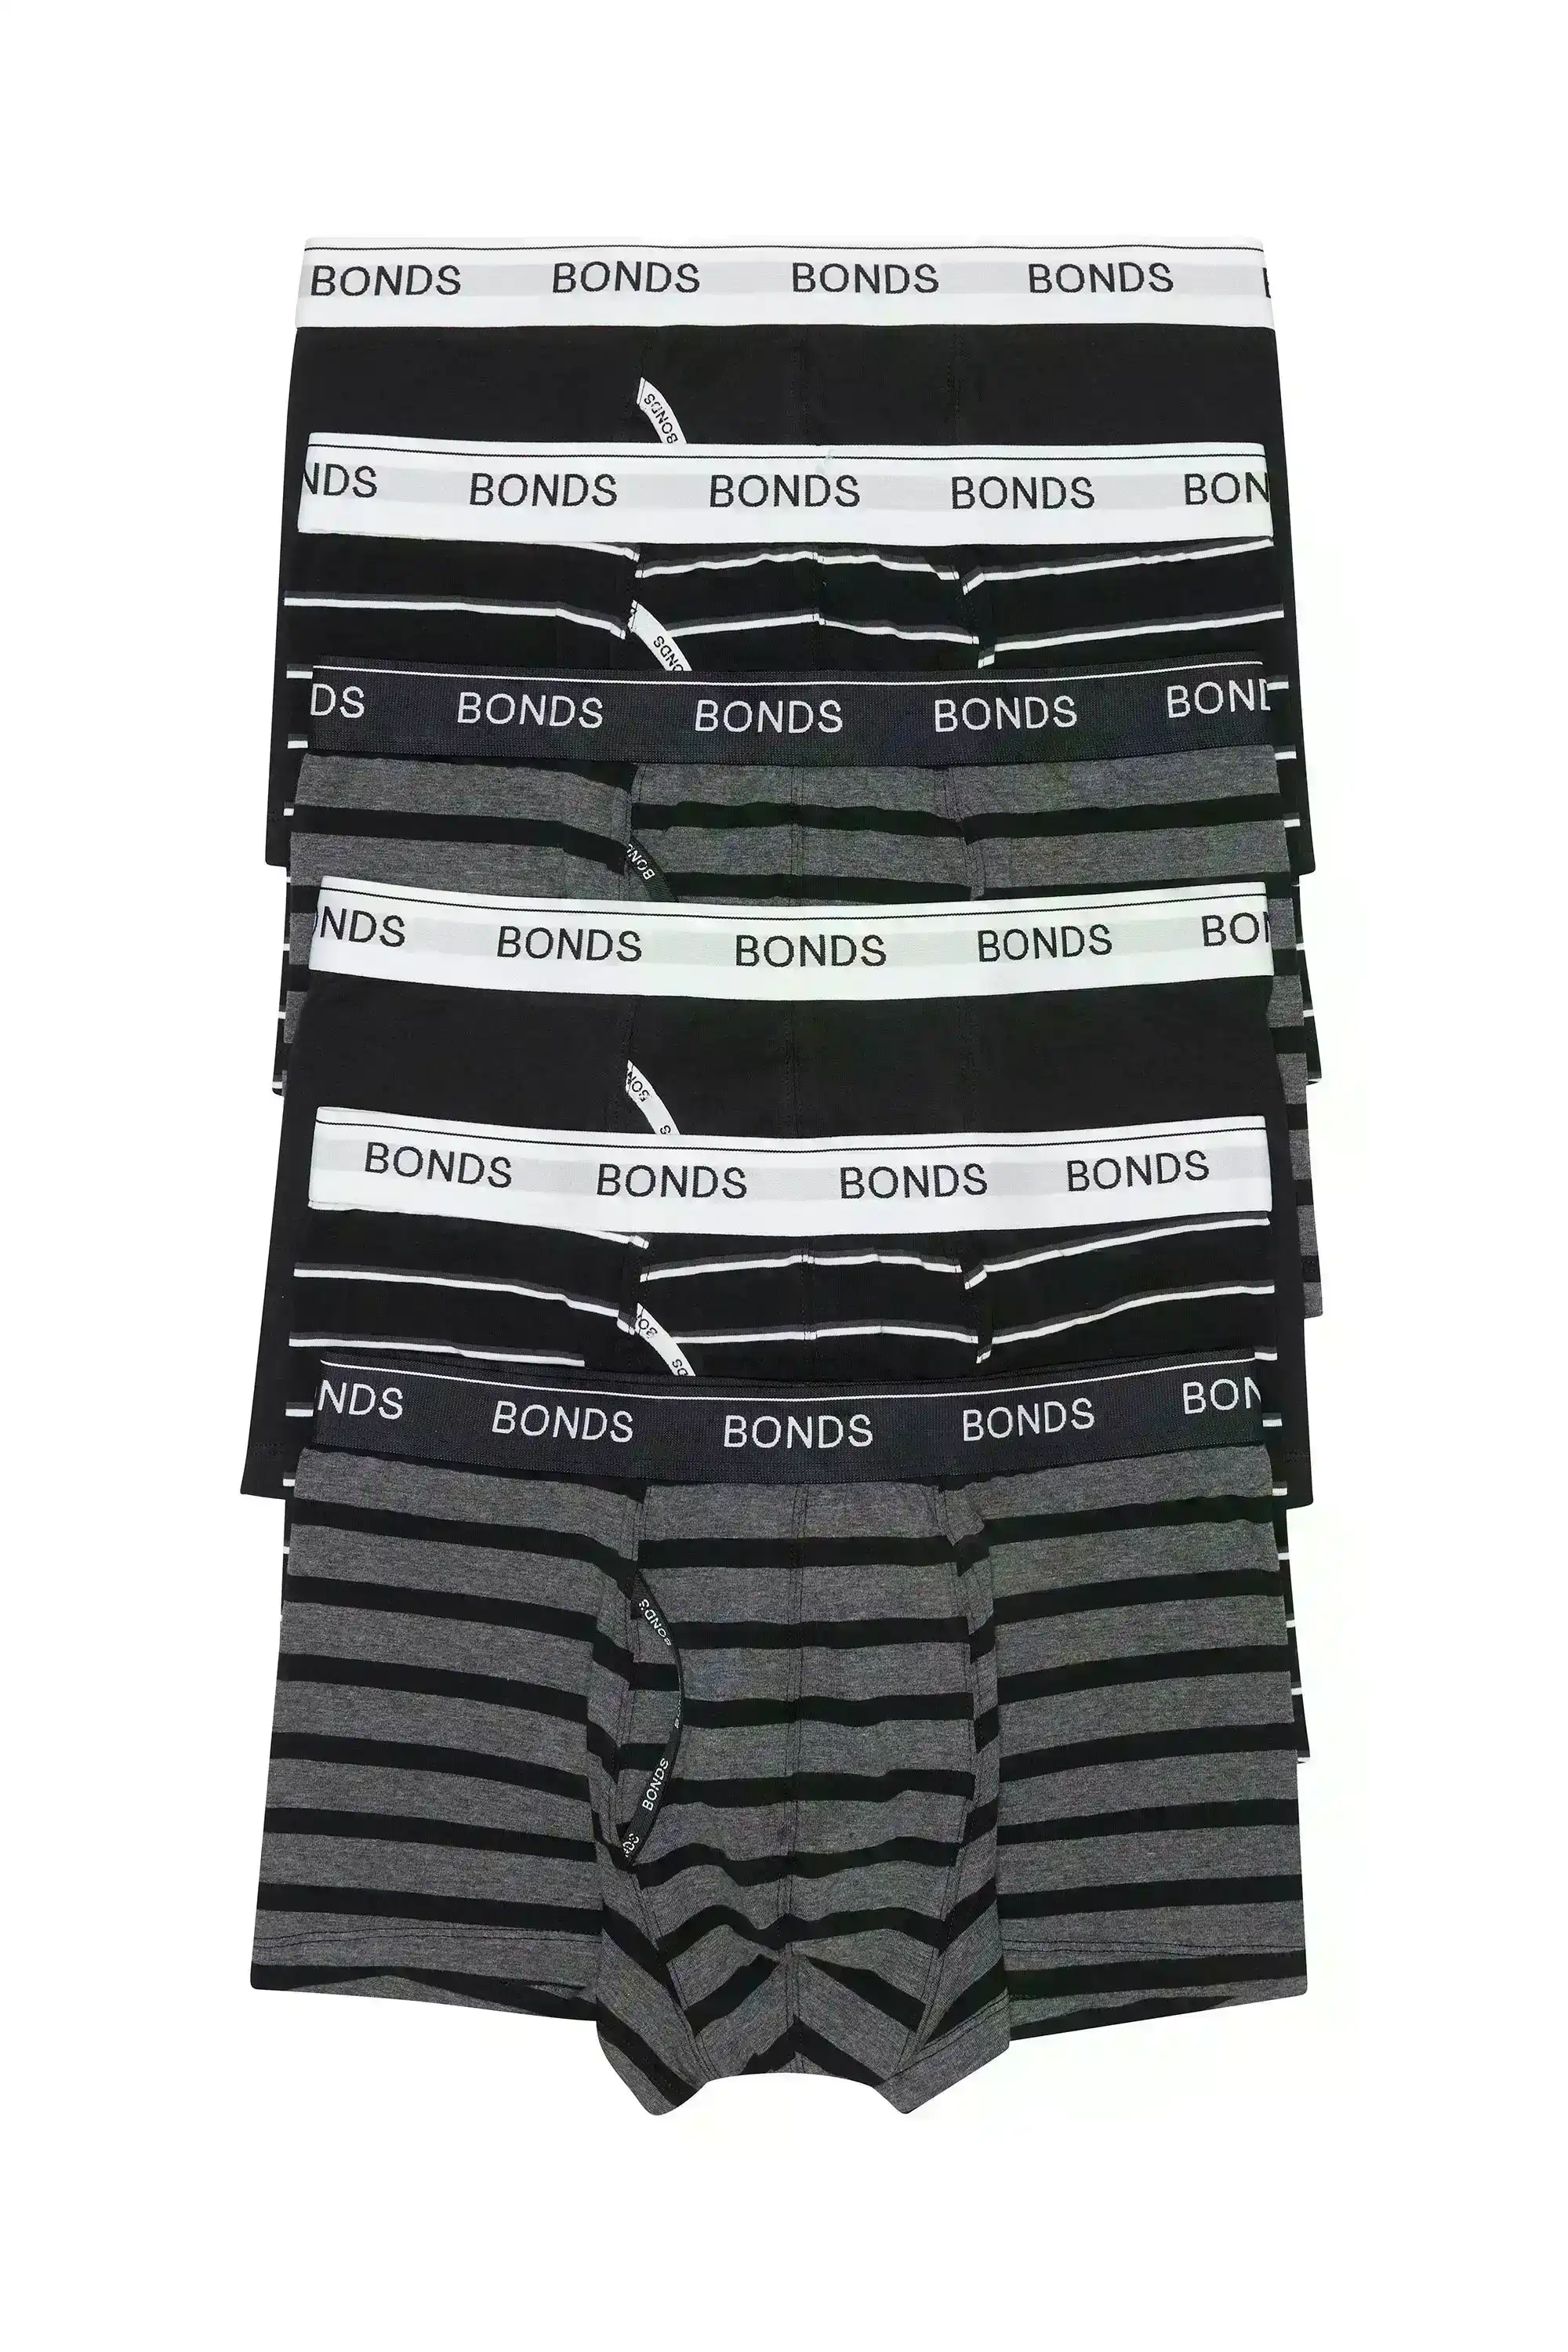 12 X Bonds Mens Guyfront Trunks Underwear Black / Grey Stripe